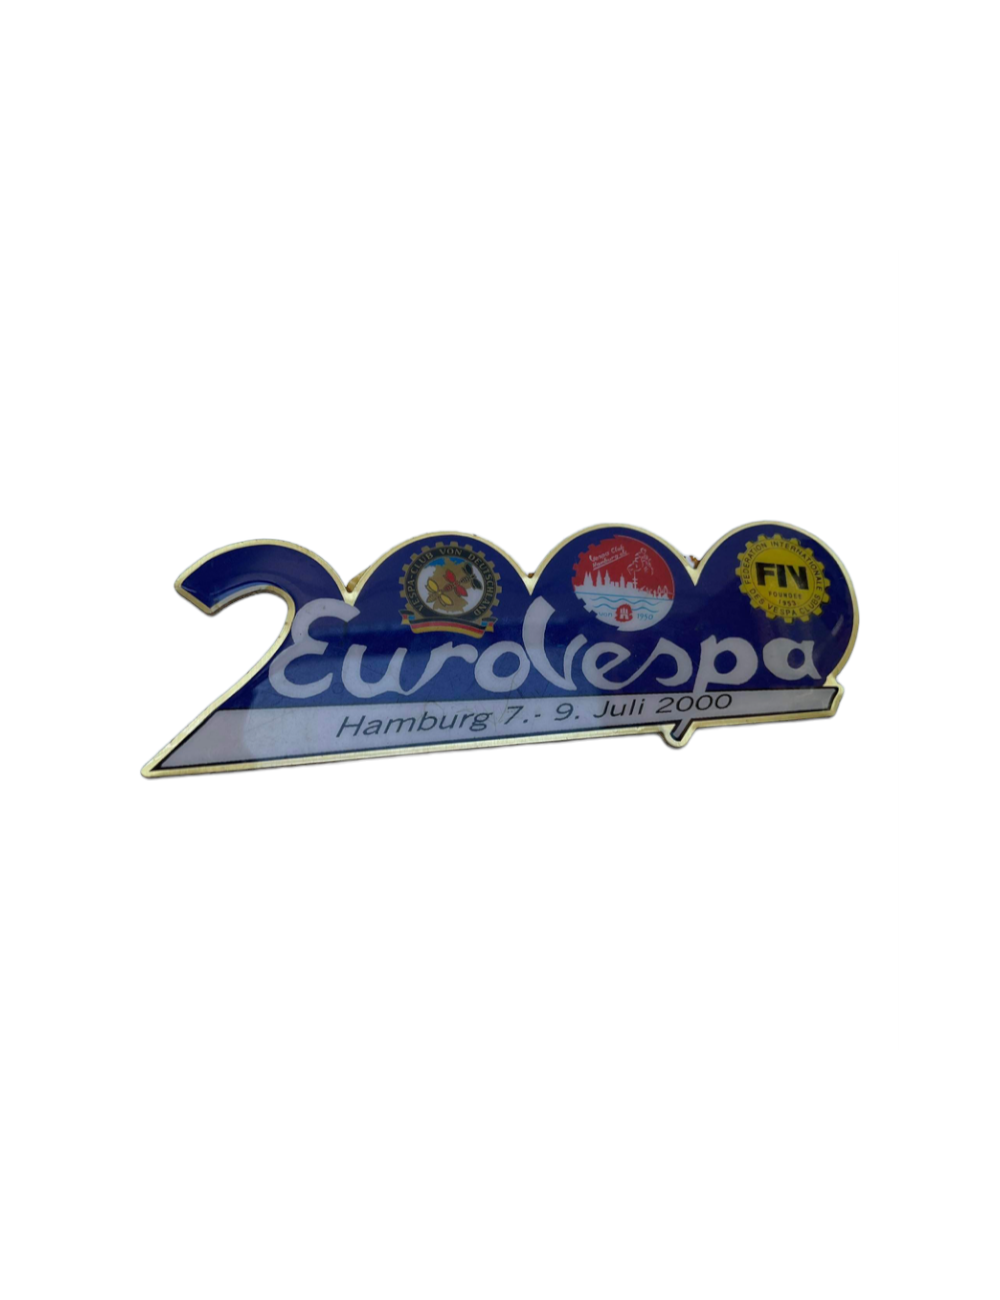 Placca Eurovespa Hamburg 7.- 9. Juli 2000